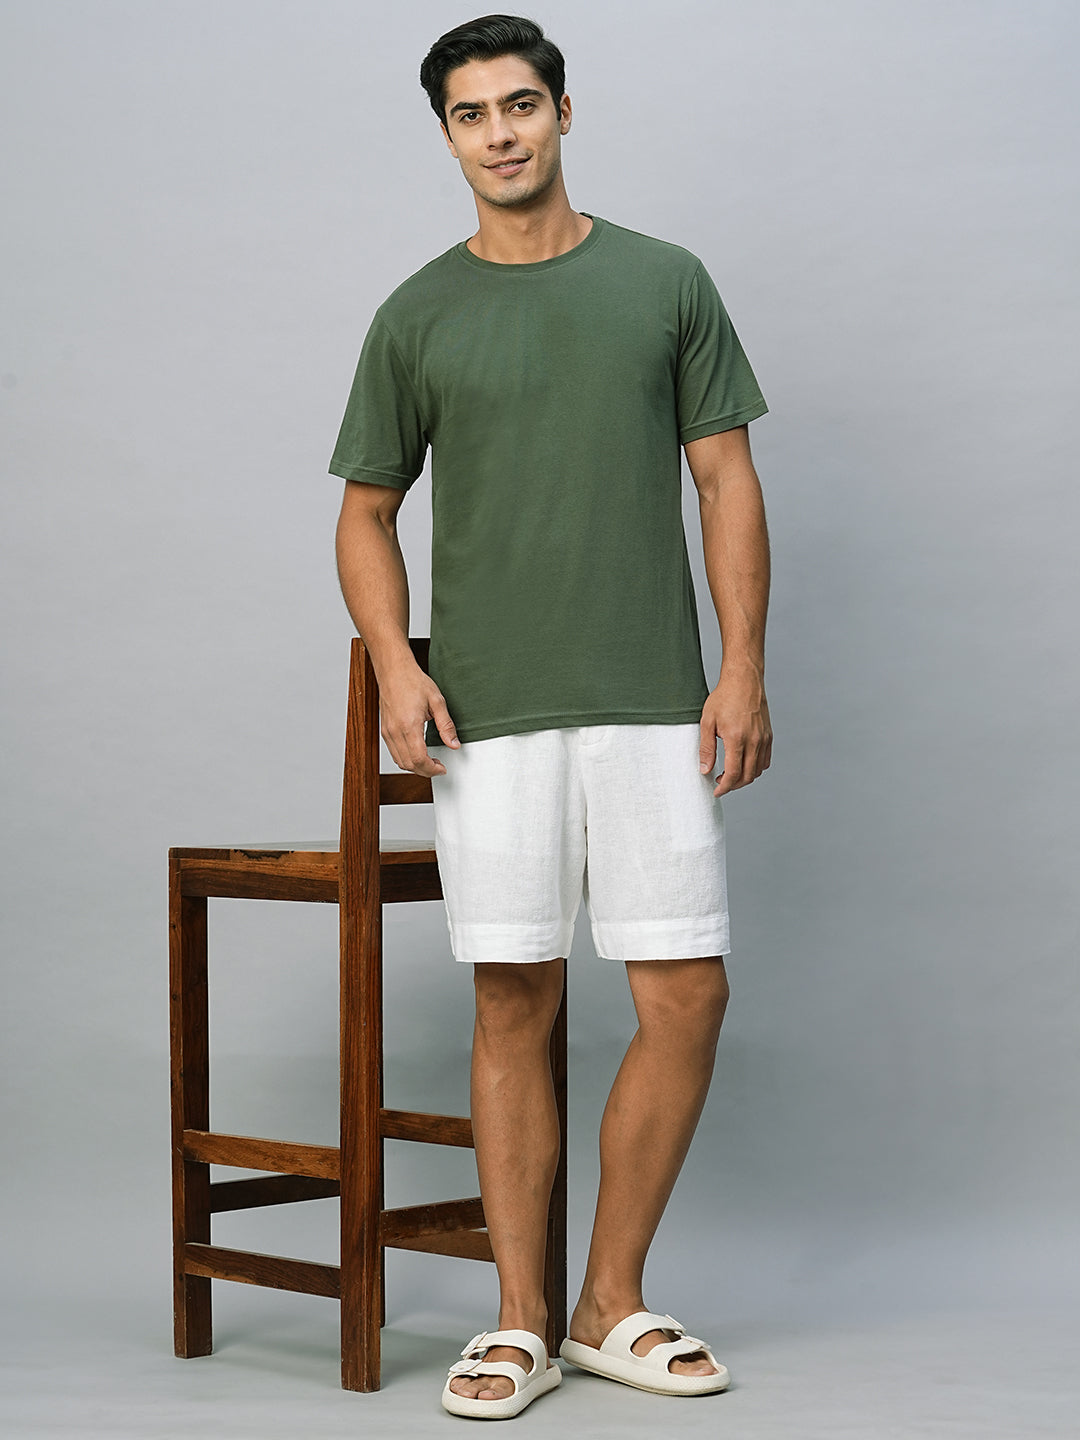 Men's Green Cotton Regular Fit Tshirts